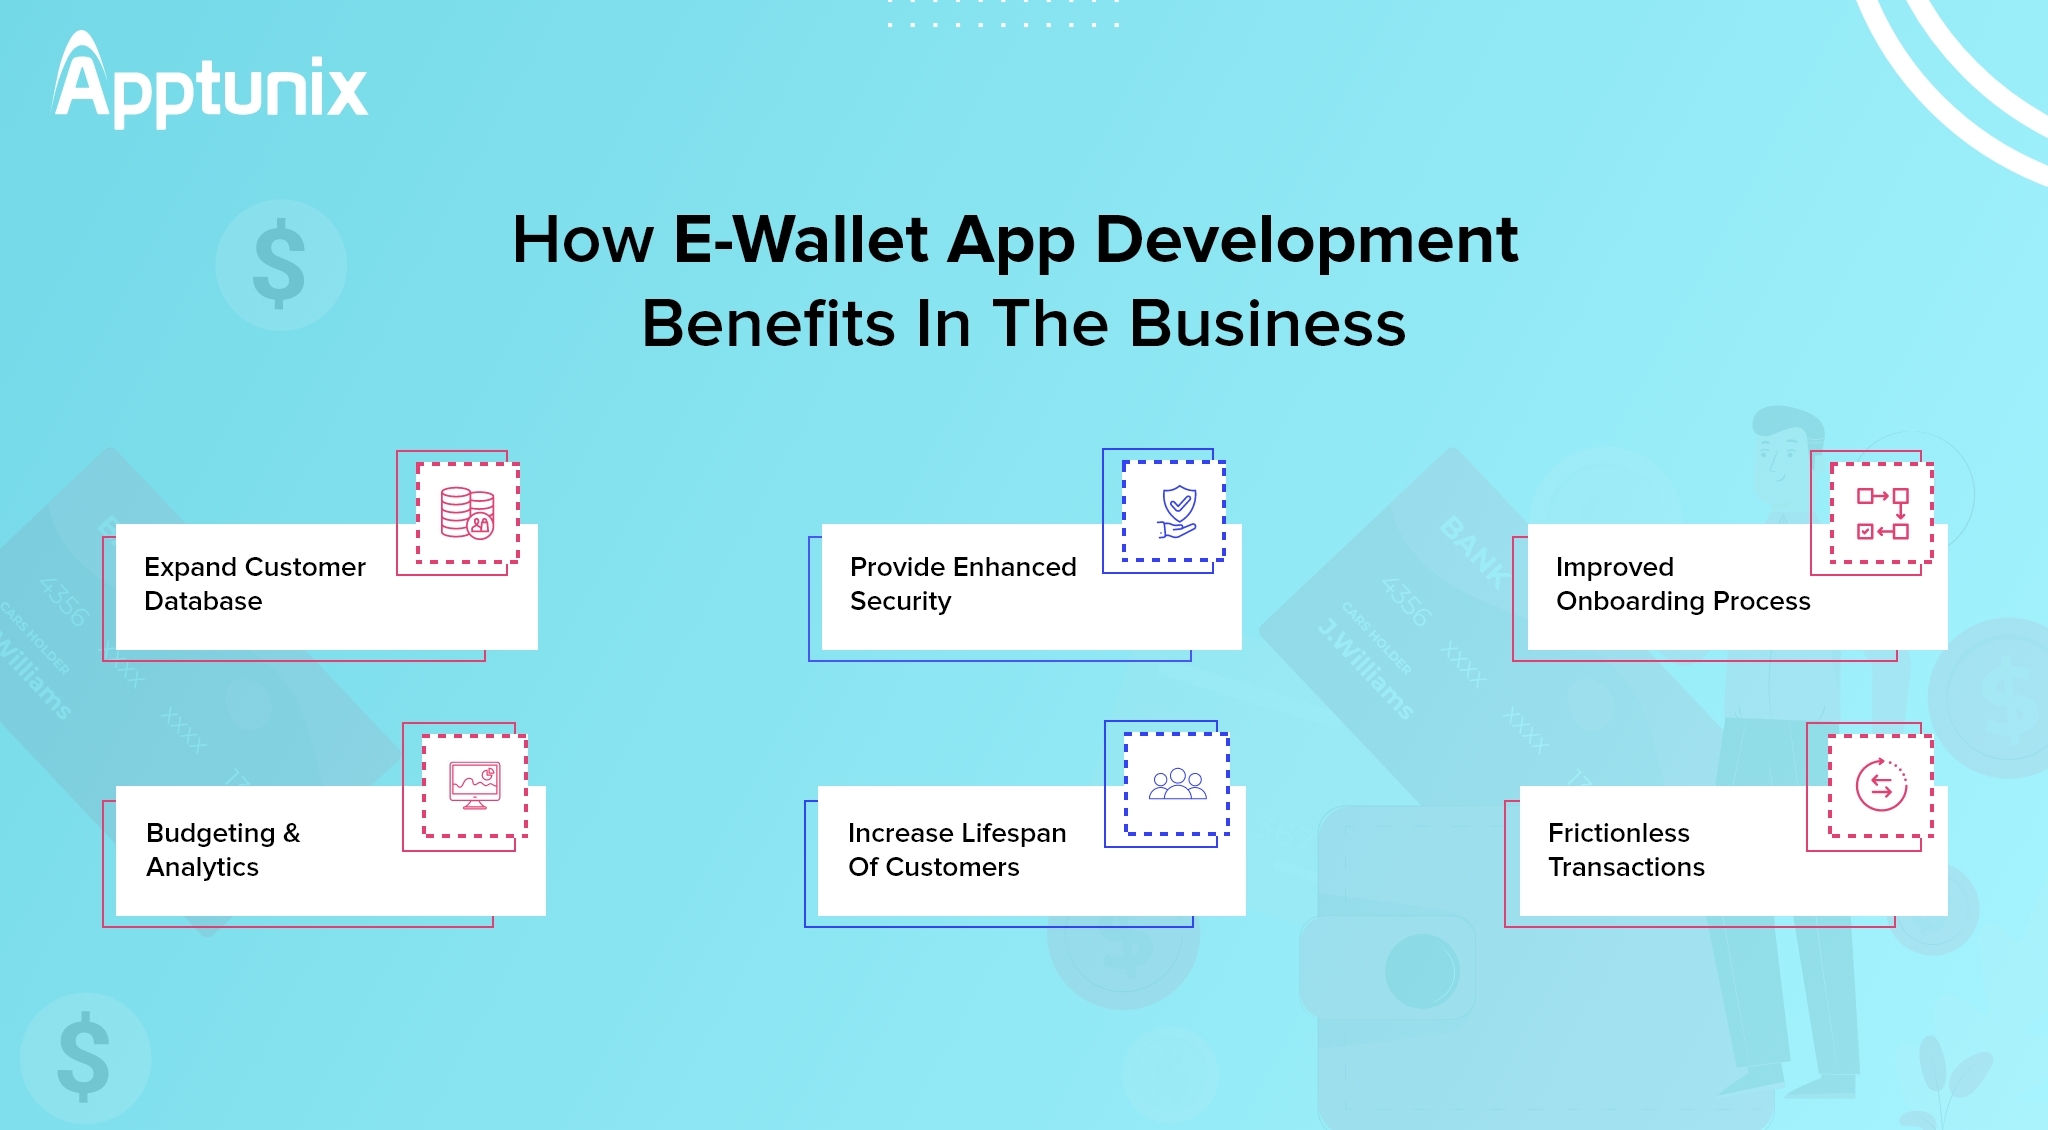 Benefits of E-wallet App Development